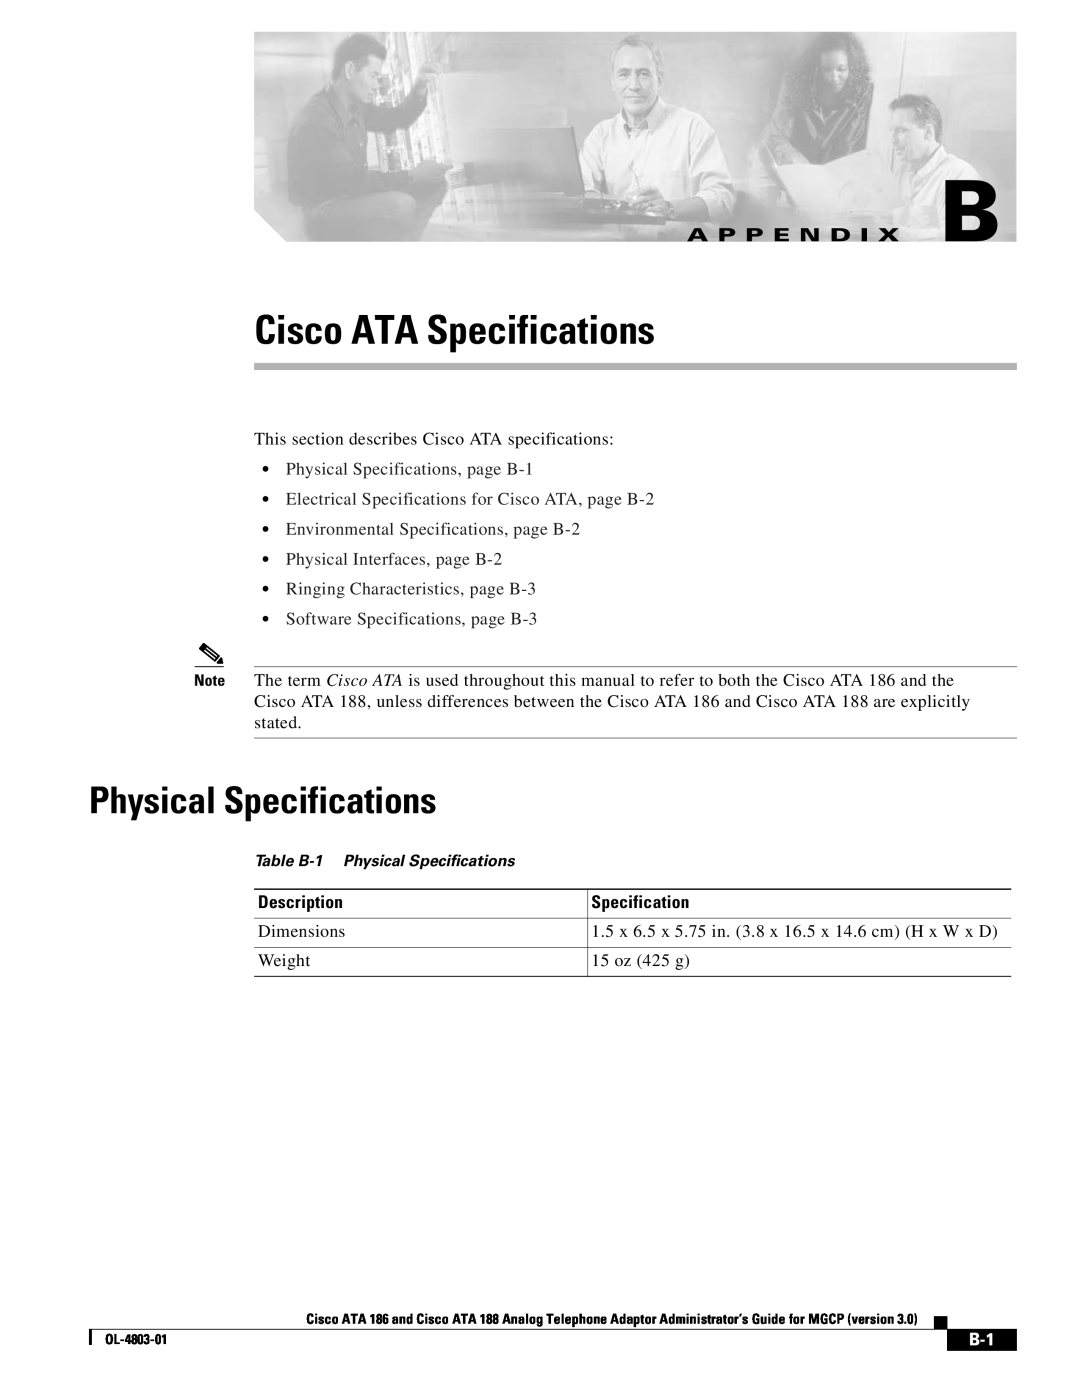 Cisco Systems ATA 186 manual Cisco ATA Specifications, Physical Specifications, A P P E N D I X B, Description 